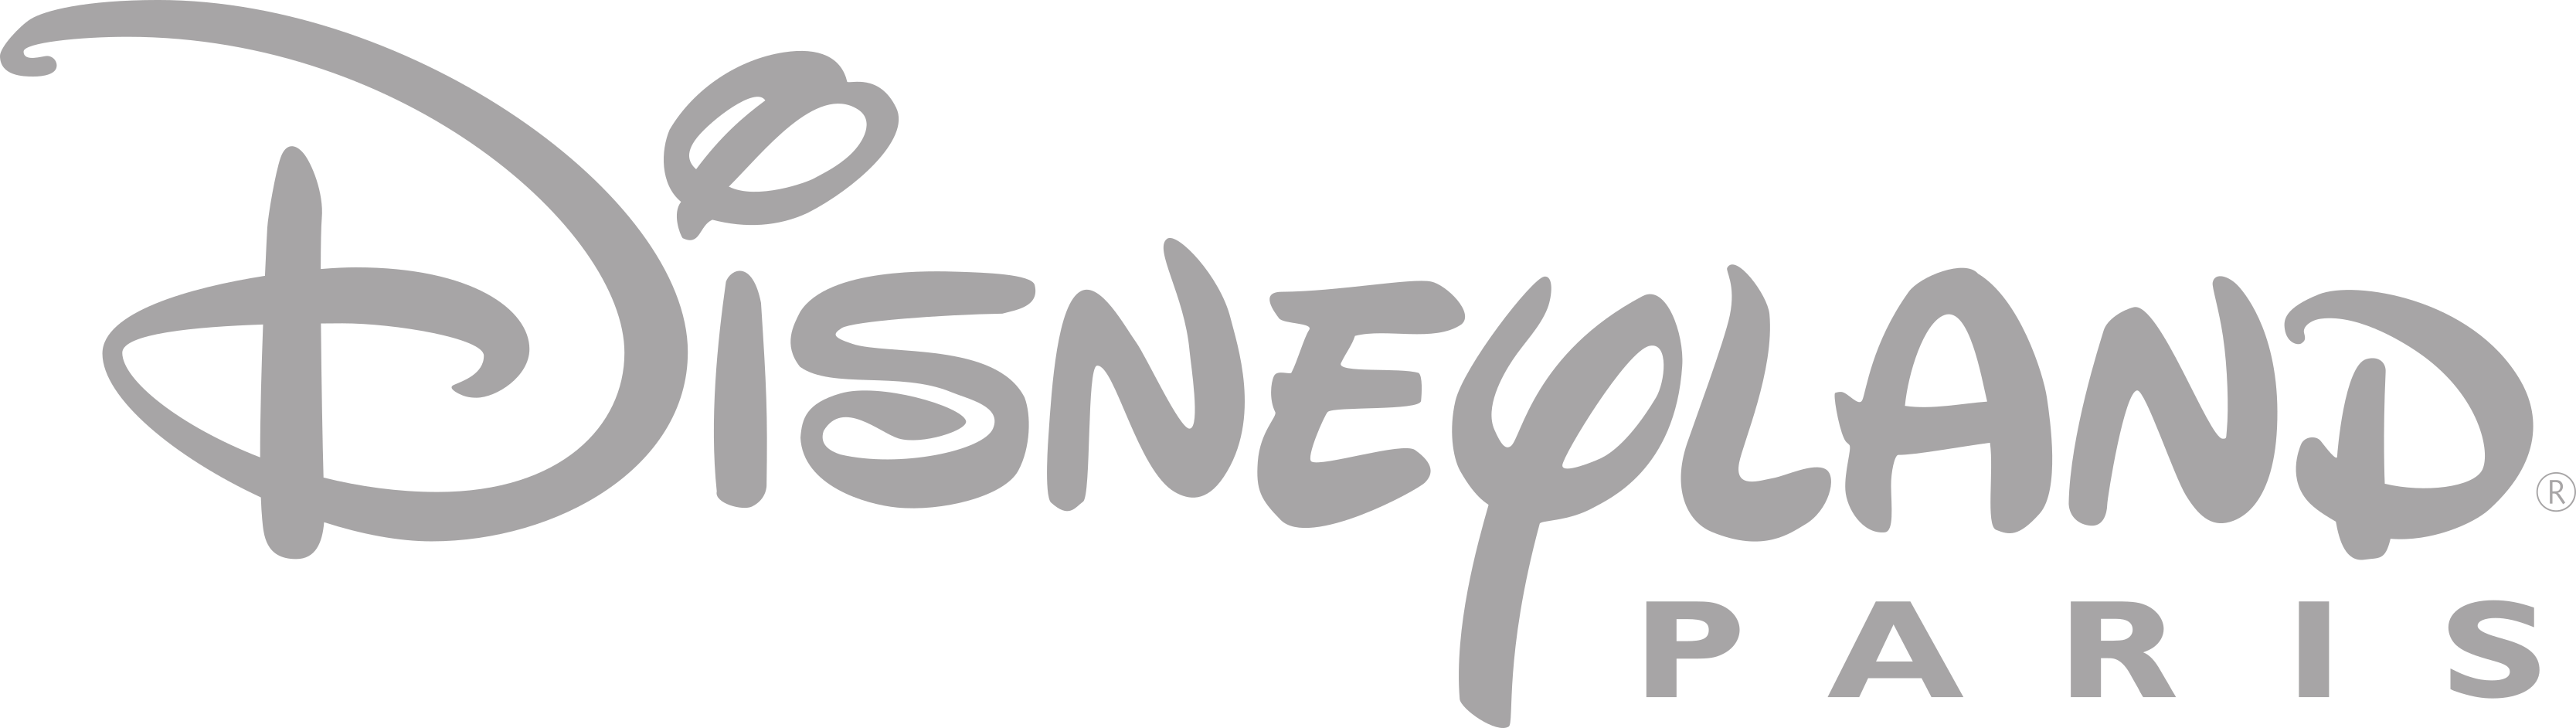 Disneyland Paris Grey Partner Logo.png